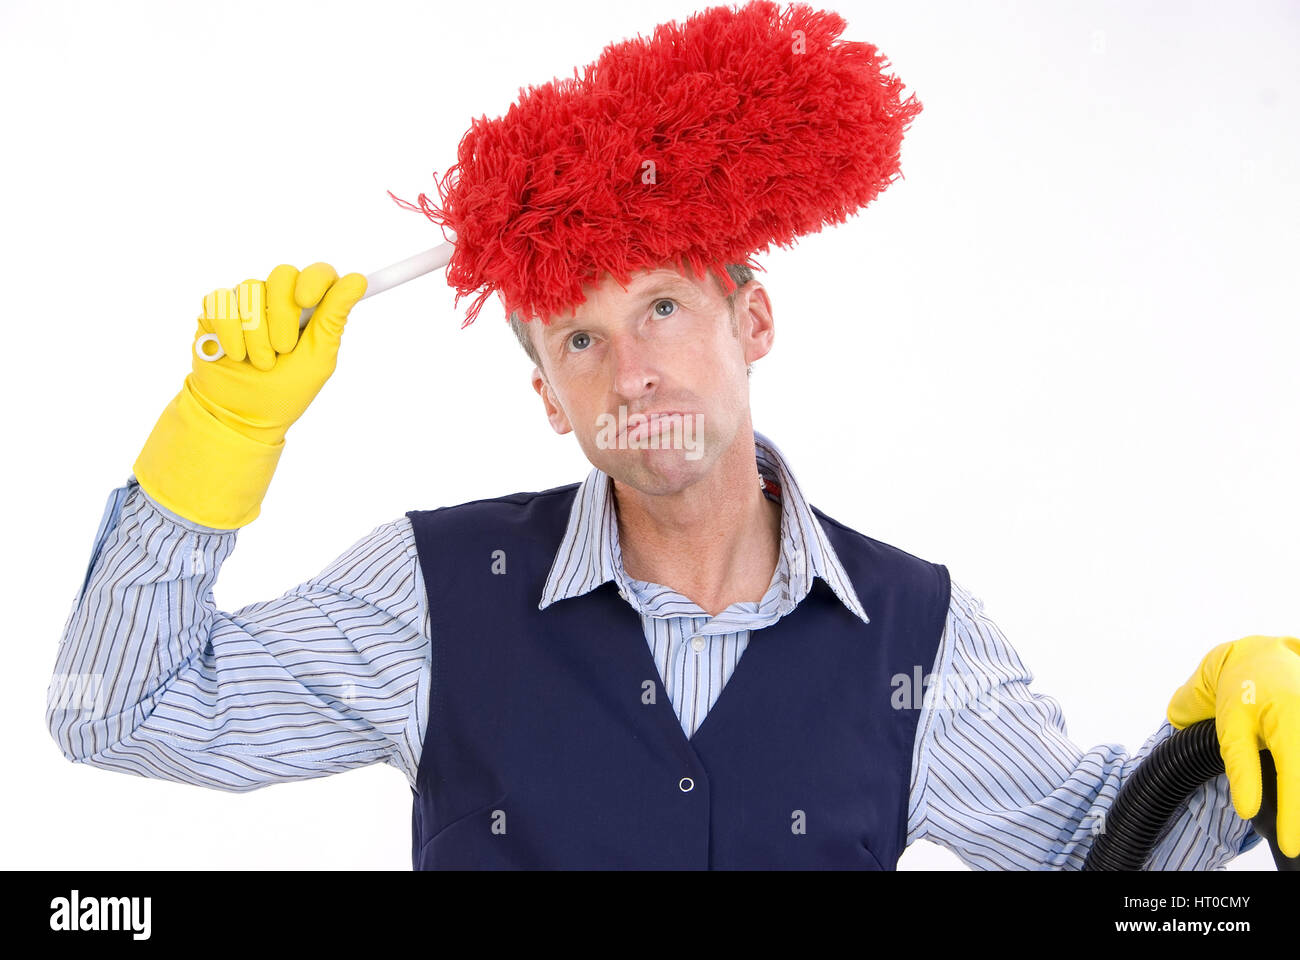 ‹berforderter Mann beim Putzen - charman Stock Photo